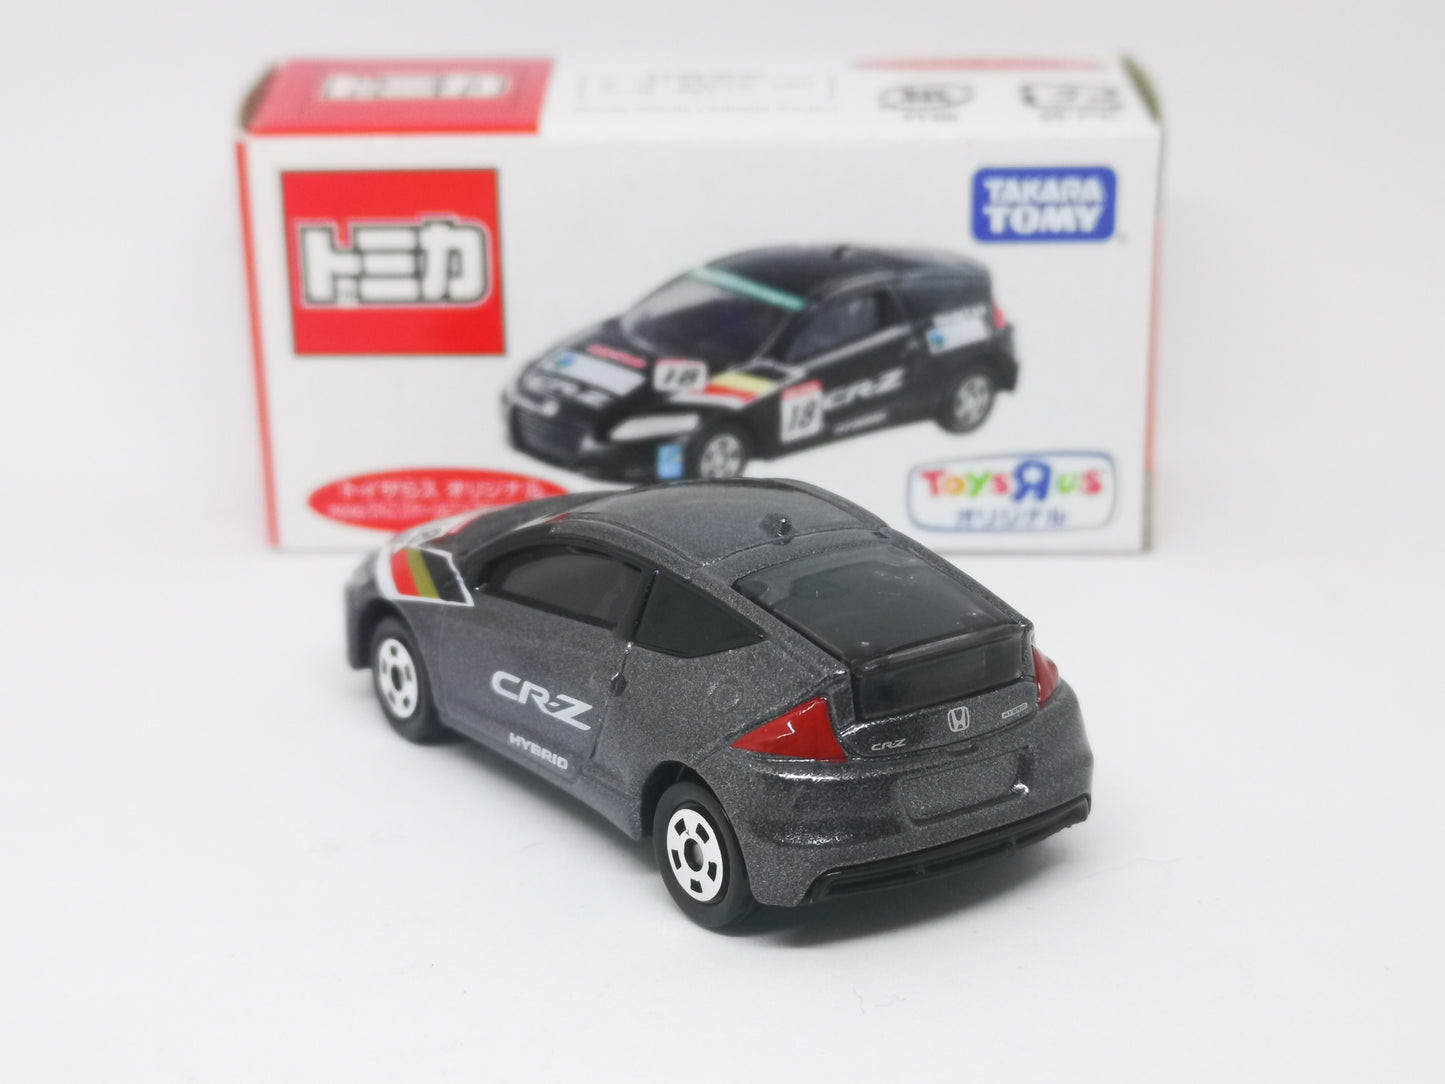 Tomica Toys"R"us Exclusive Honda Sport & ECO Program CRZ